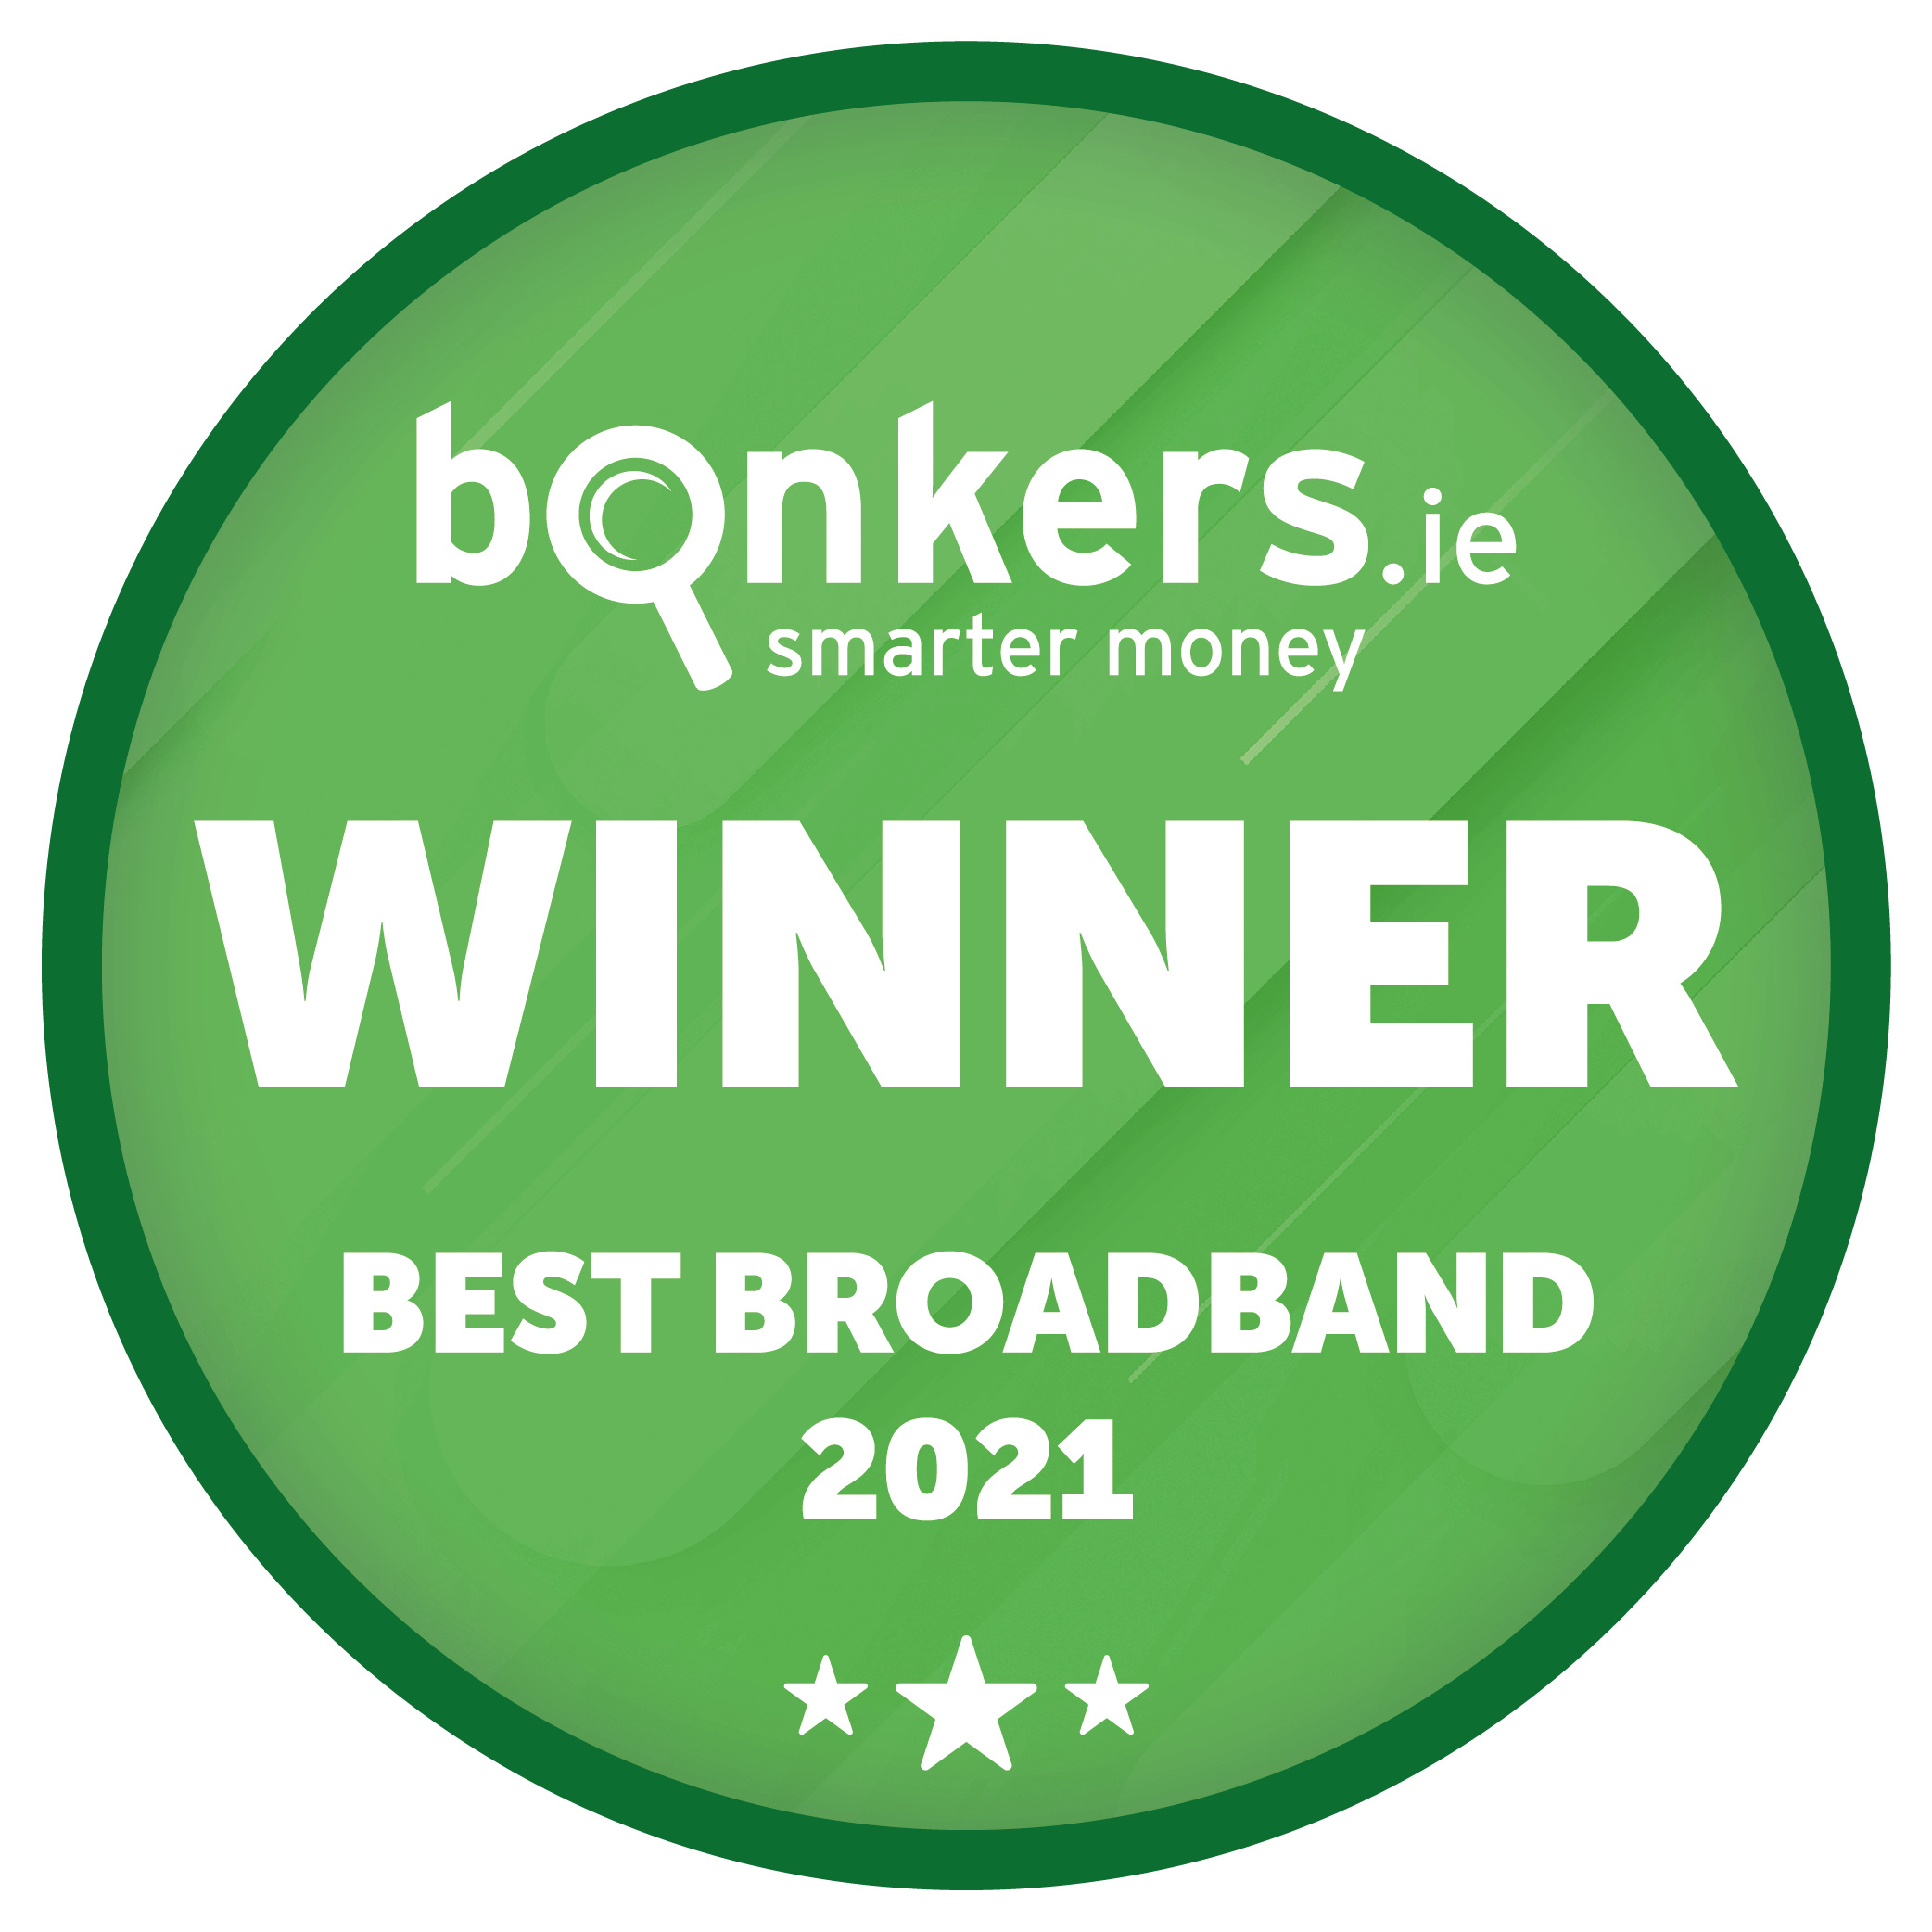 The Best Broadband by Bonkers.ie 2020